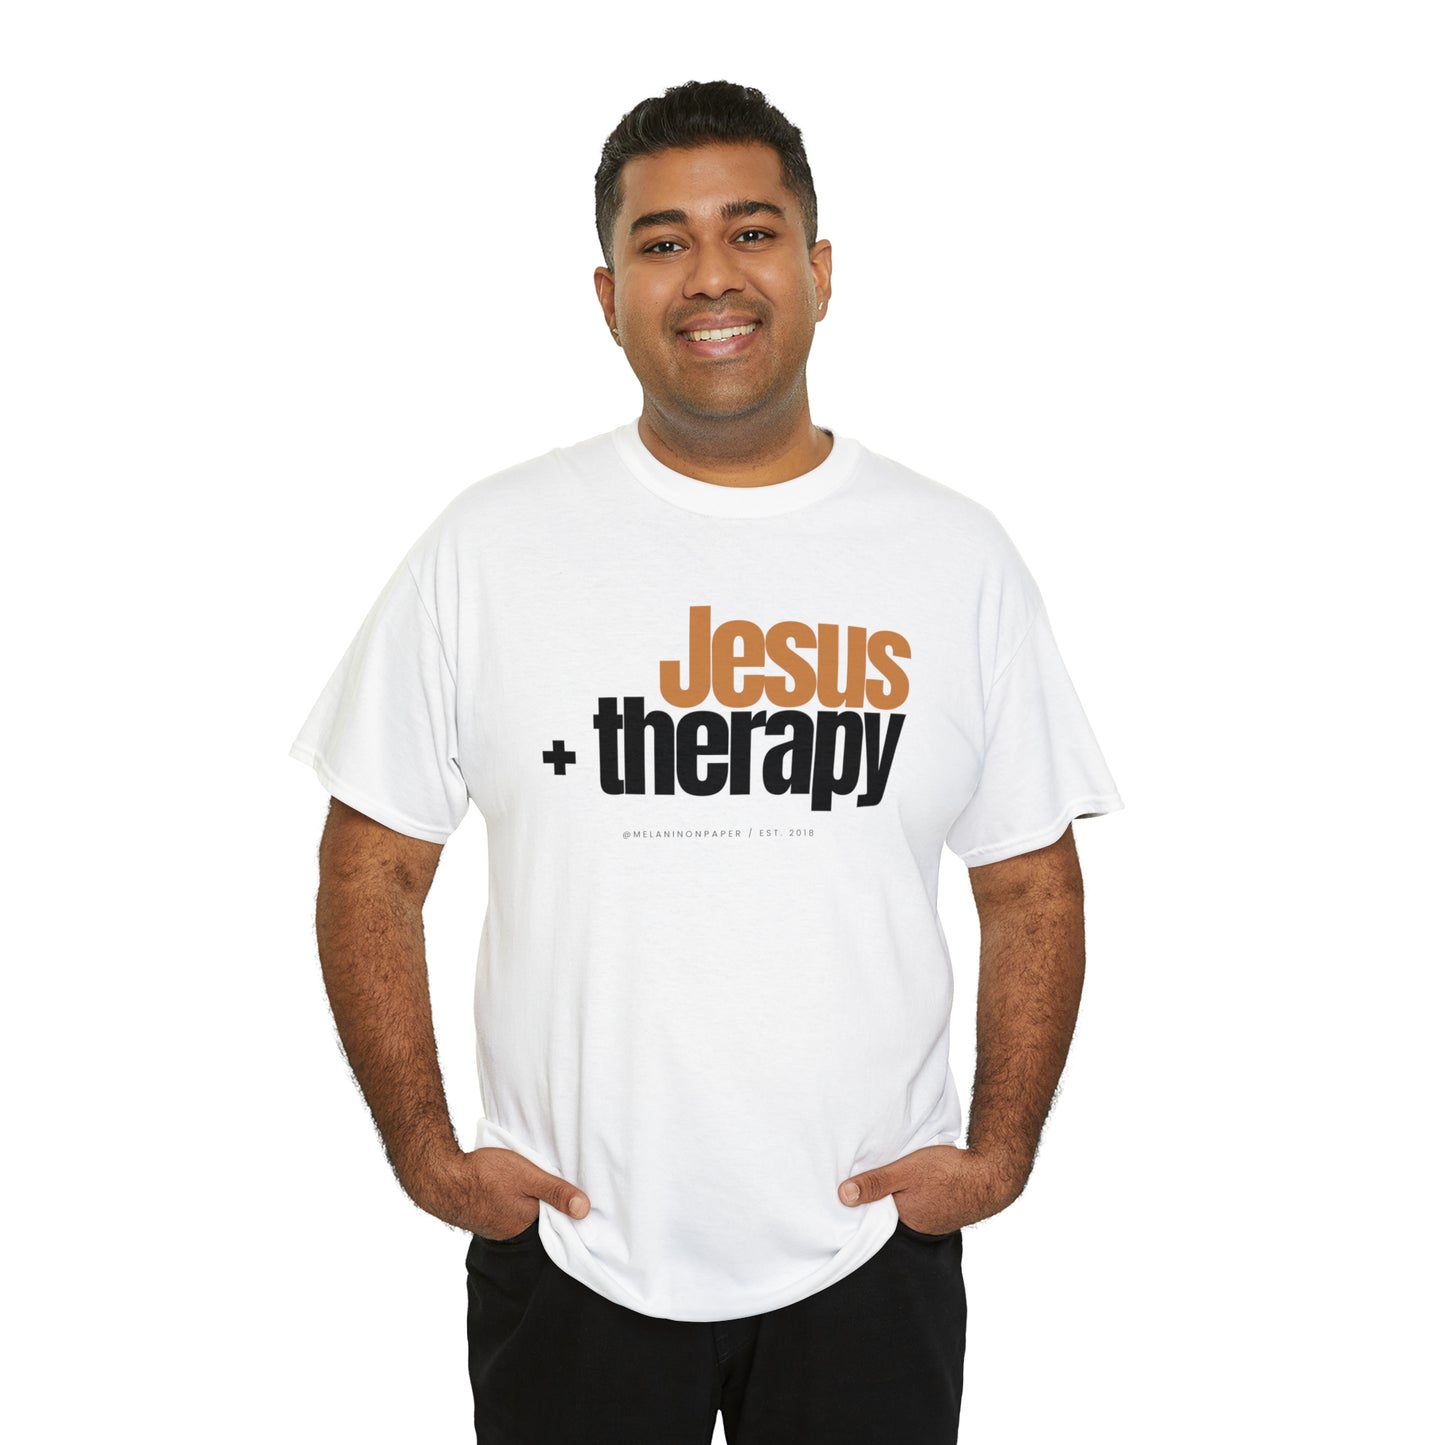 "Jesus + therapy" Unisex Heavy Cotton Tee - White, Sport Grey, & Graphite Heather Grey